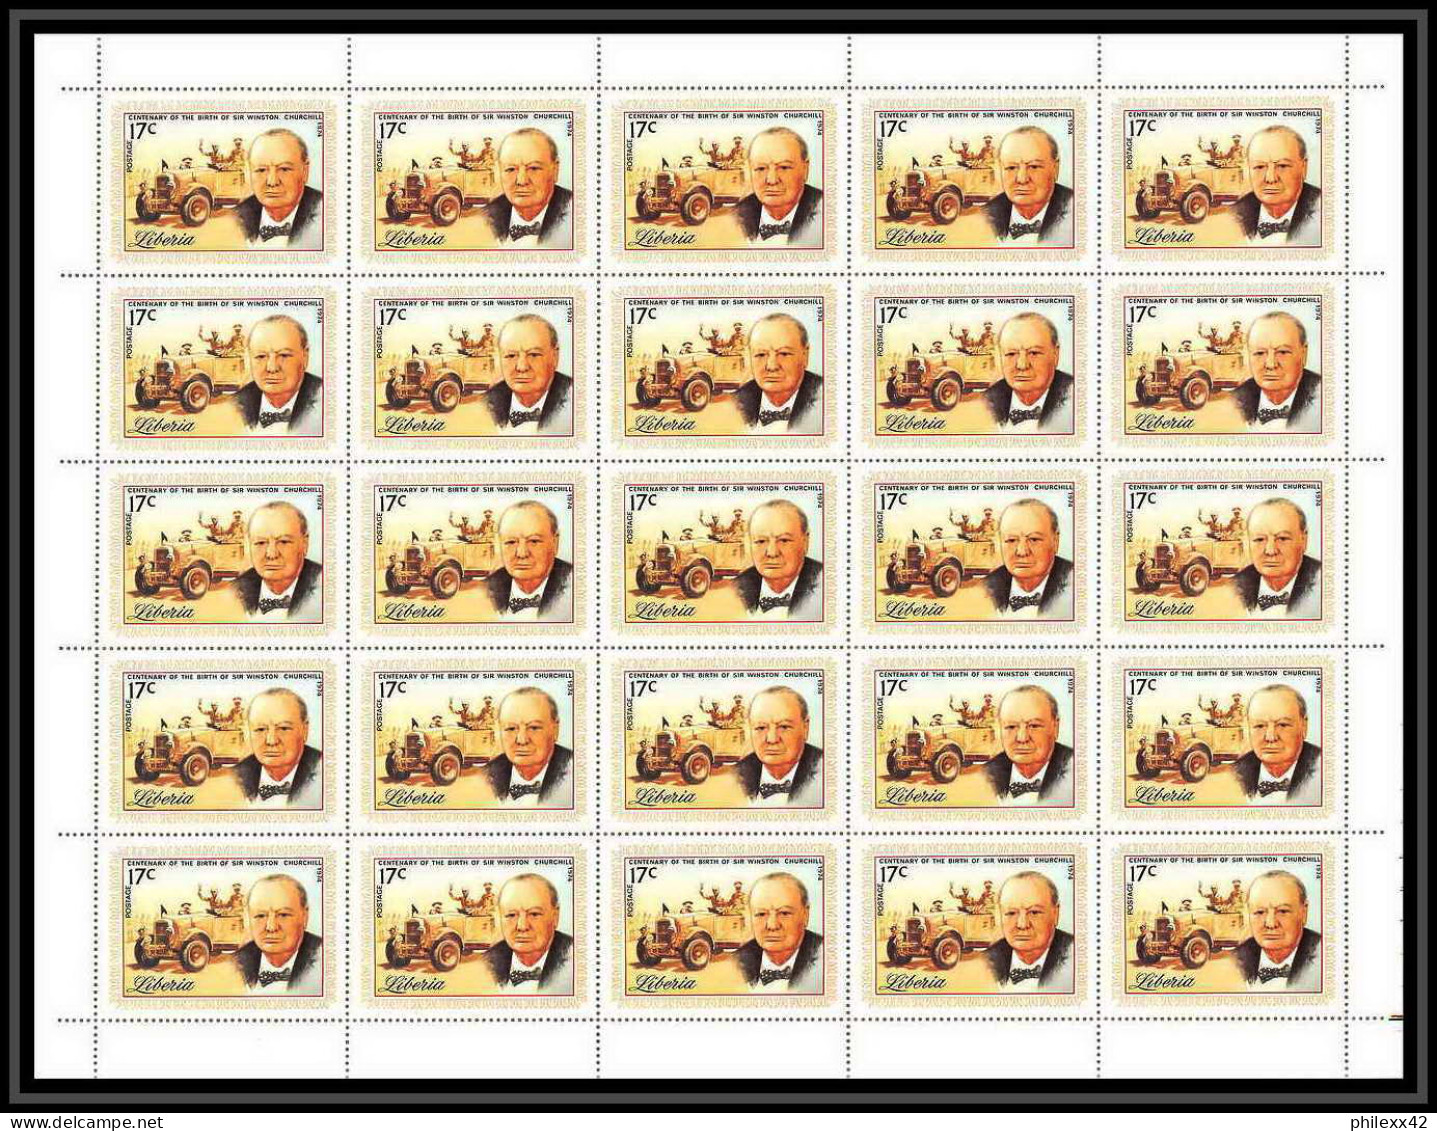 368g - Libéria MNH ** 1974 y&t N° 661 / 666 Sir Winston Churchill feuilles (sheets)